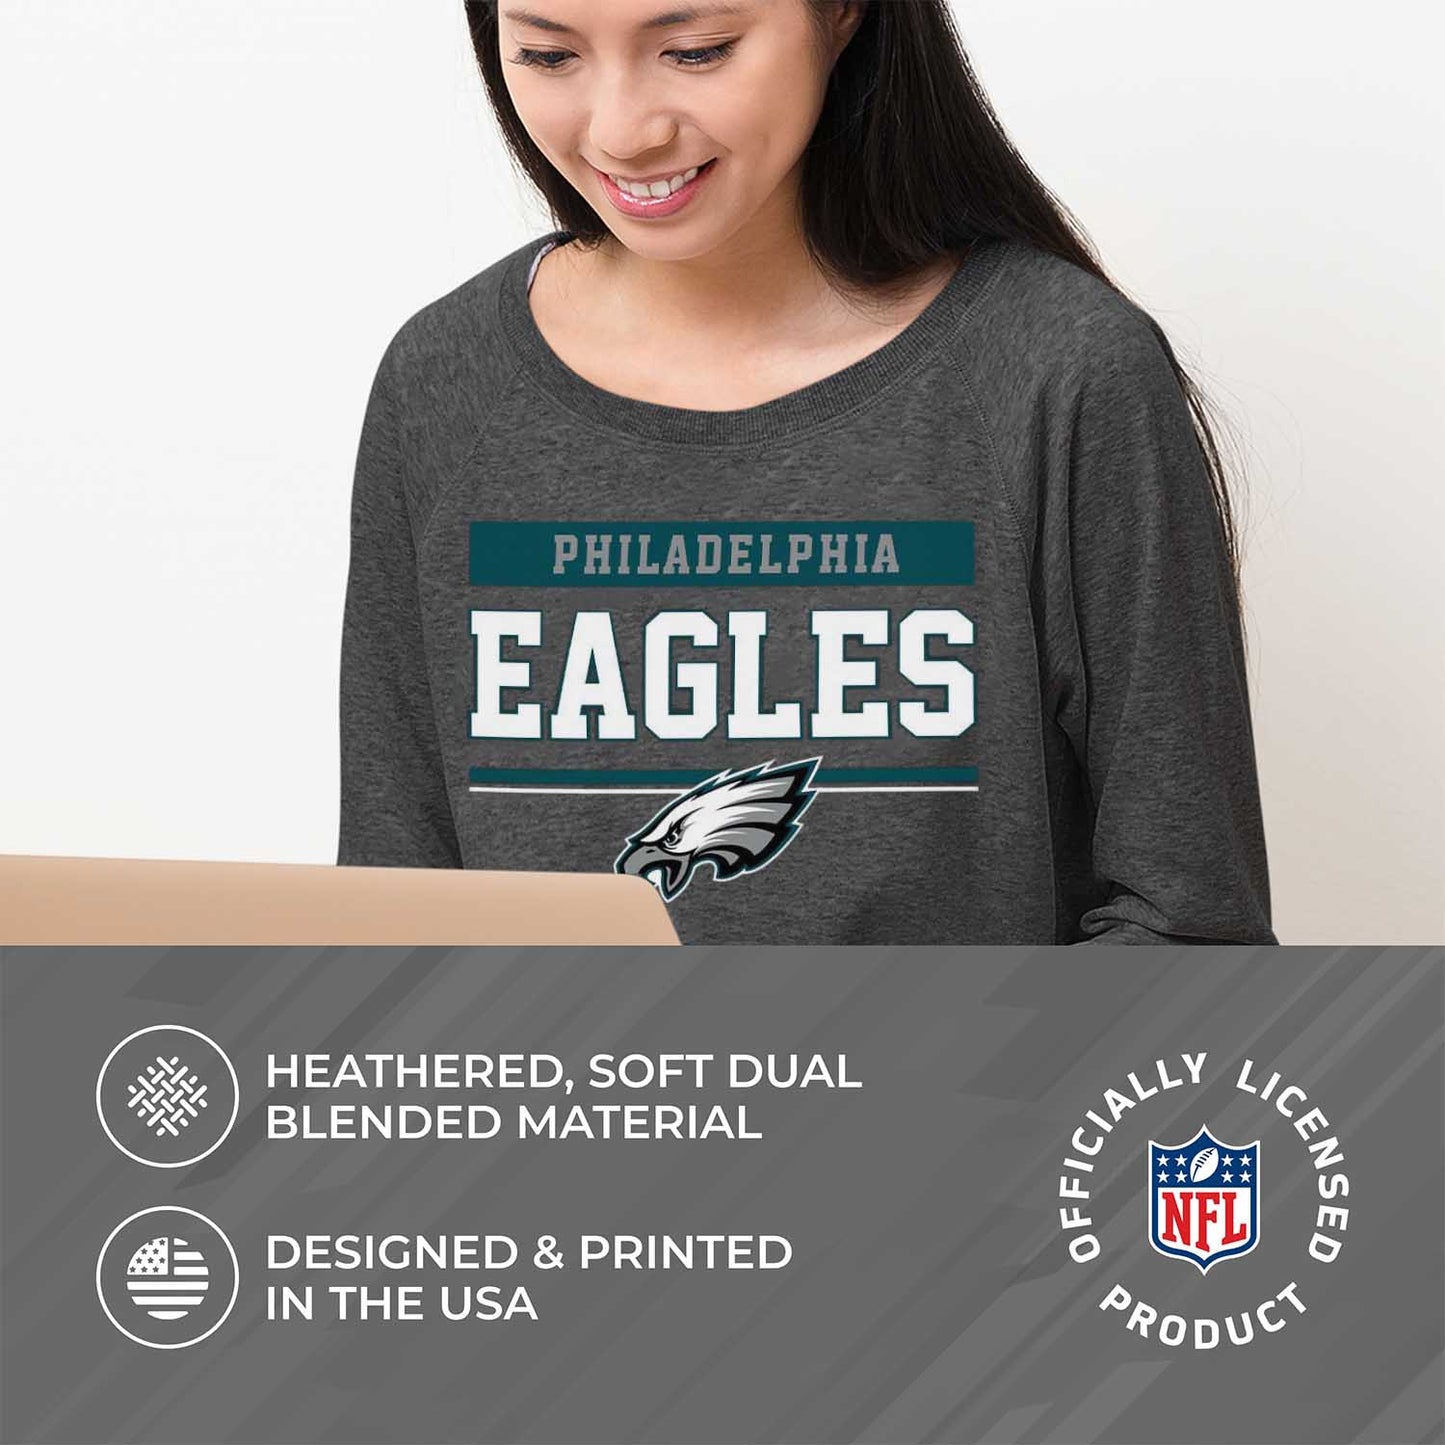 Philadelphia Eagles NFL Womens Charcoal Crew Neck Football Apparel - Charcoal